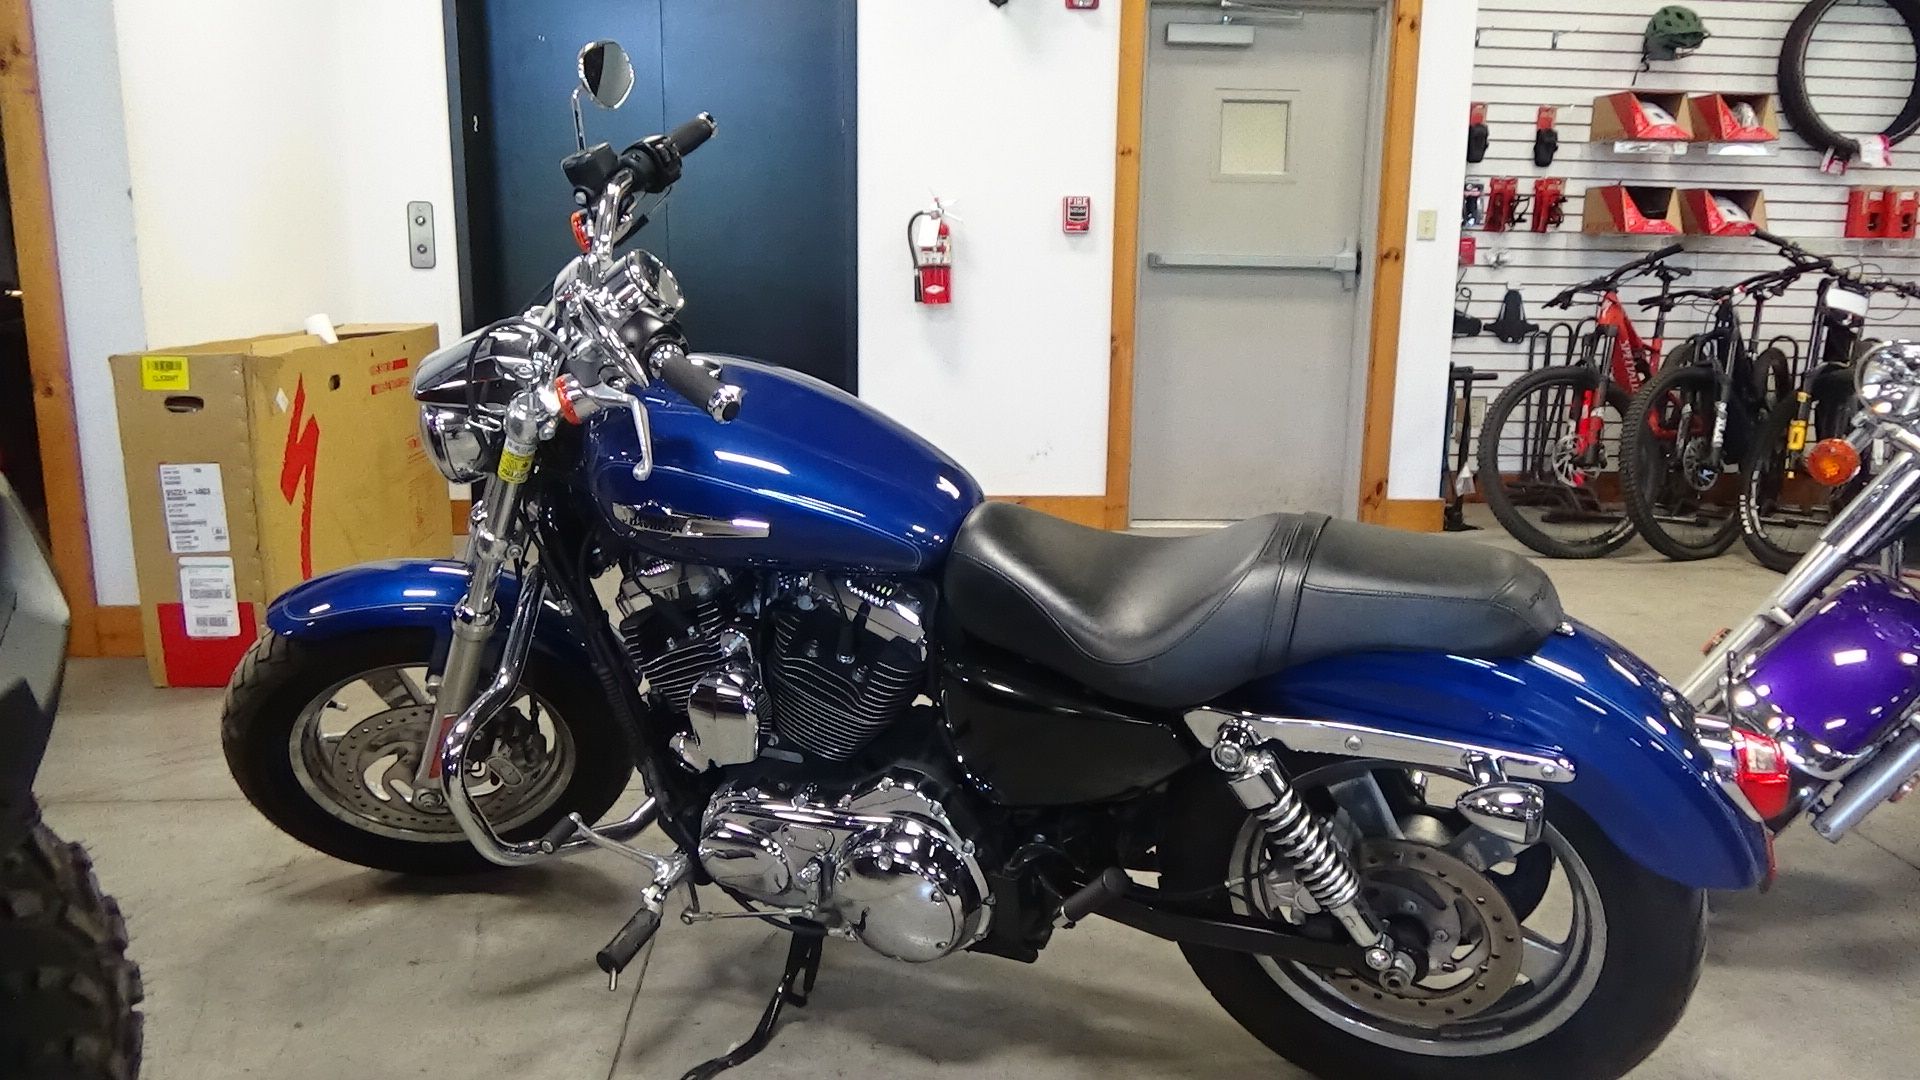 2015 Harley-Davidson 1200 Custom in Bennington, Vermont - Photo 2